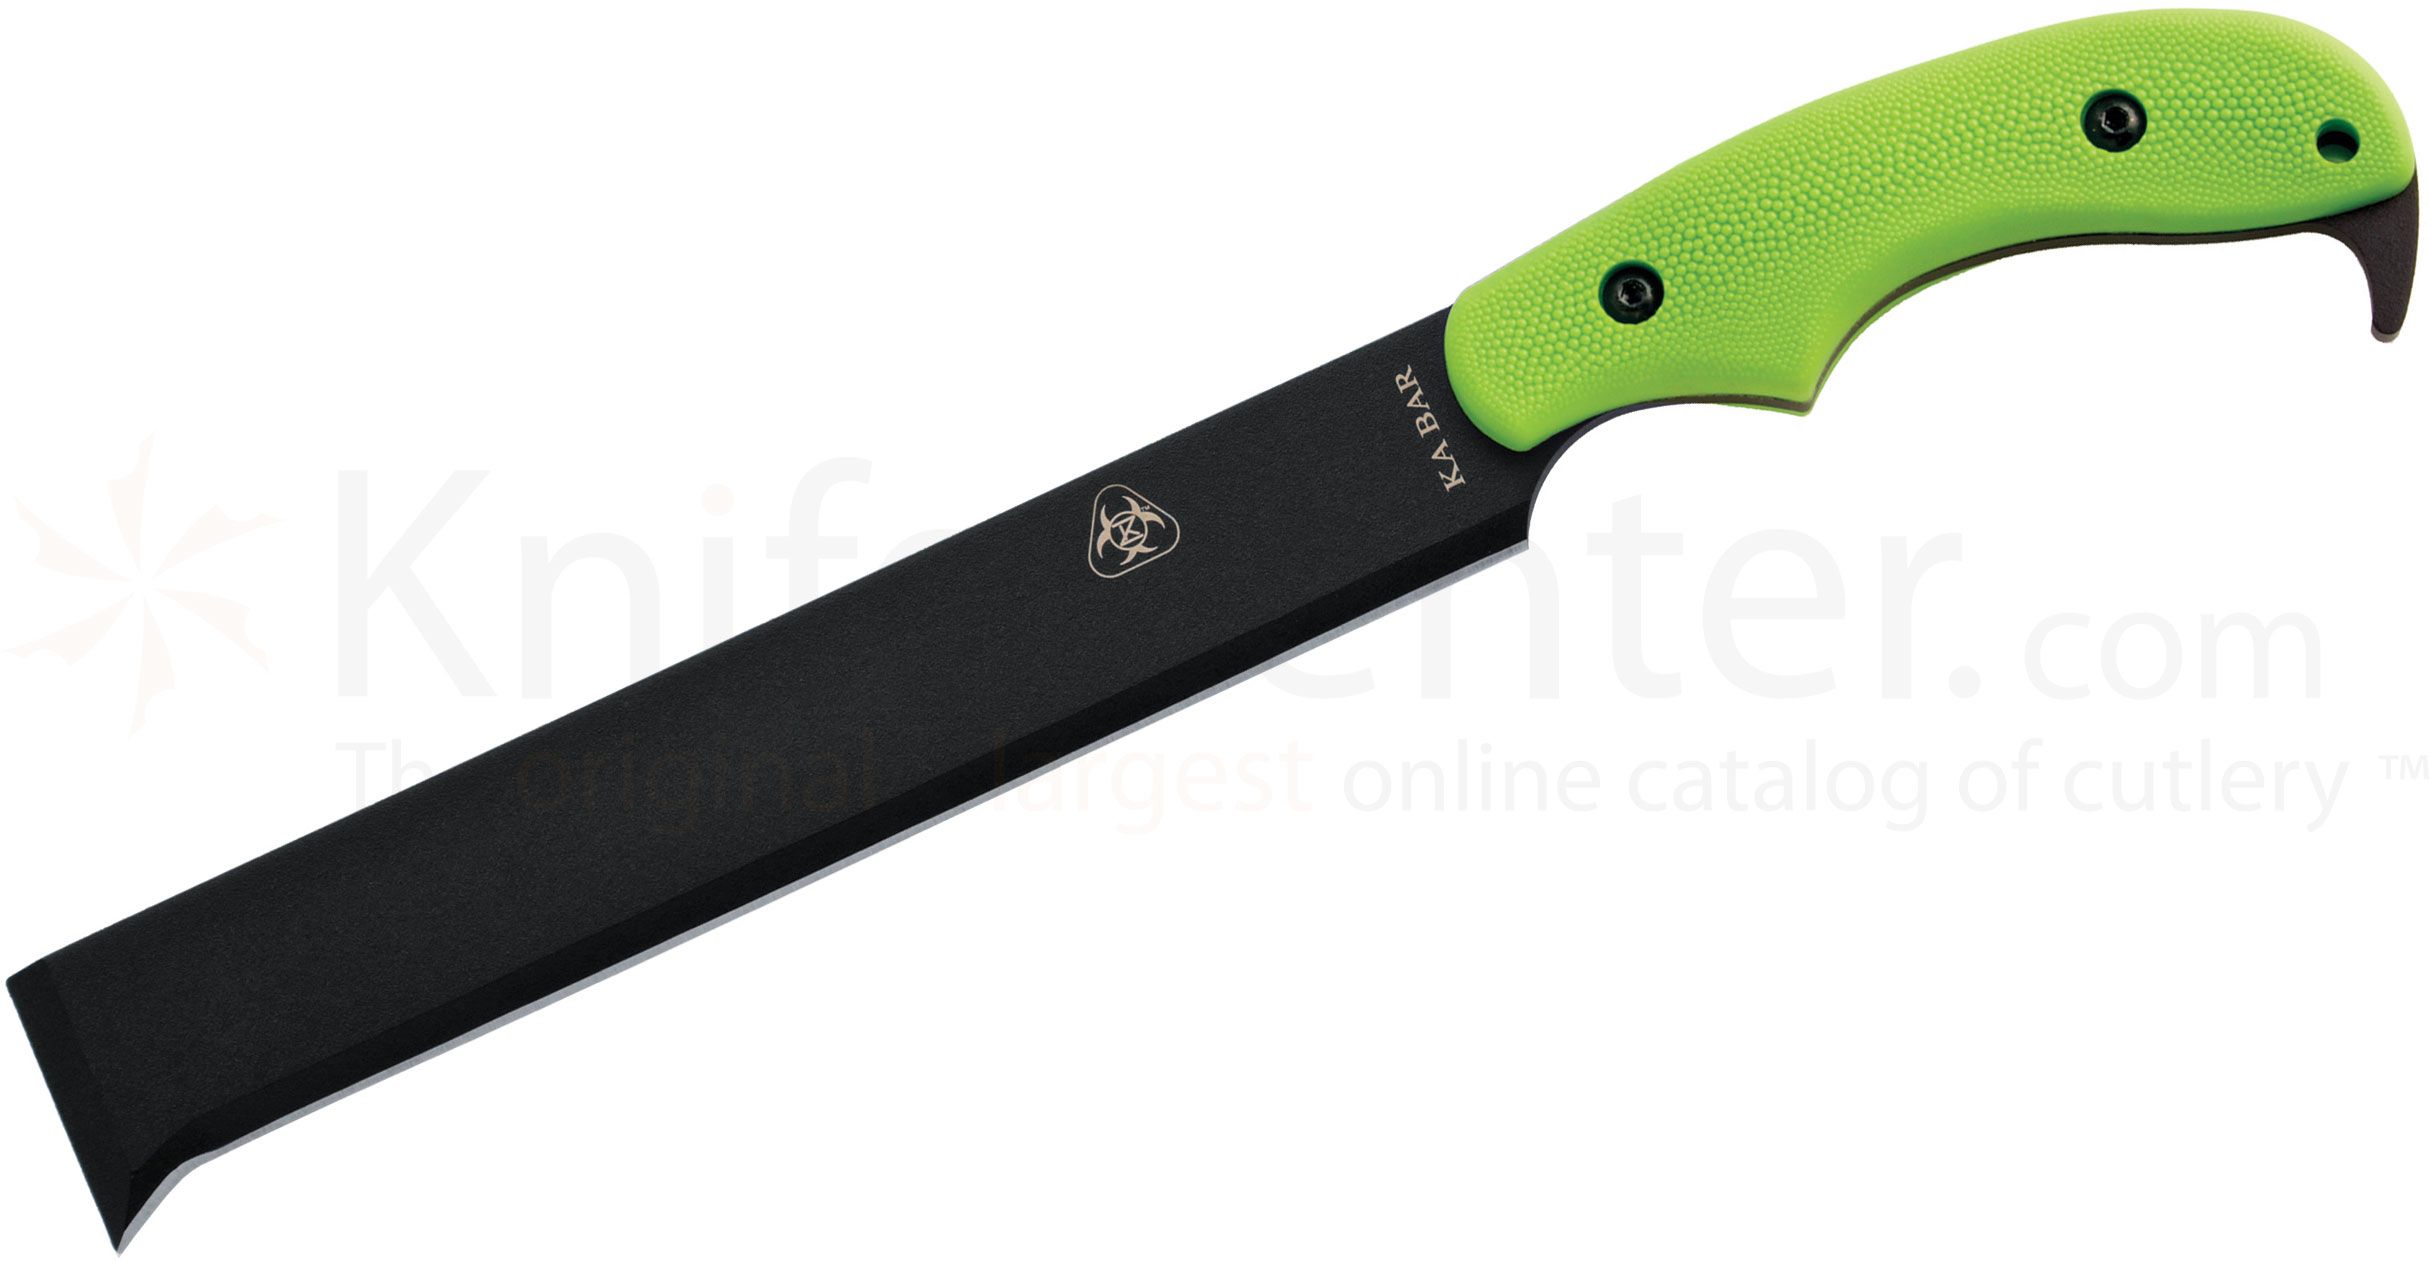 Knife and scissors sharpener, 4 modules - Zokura